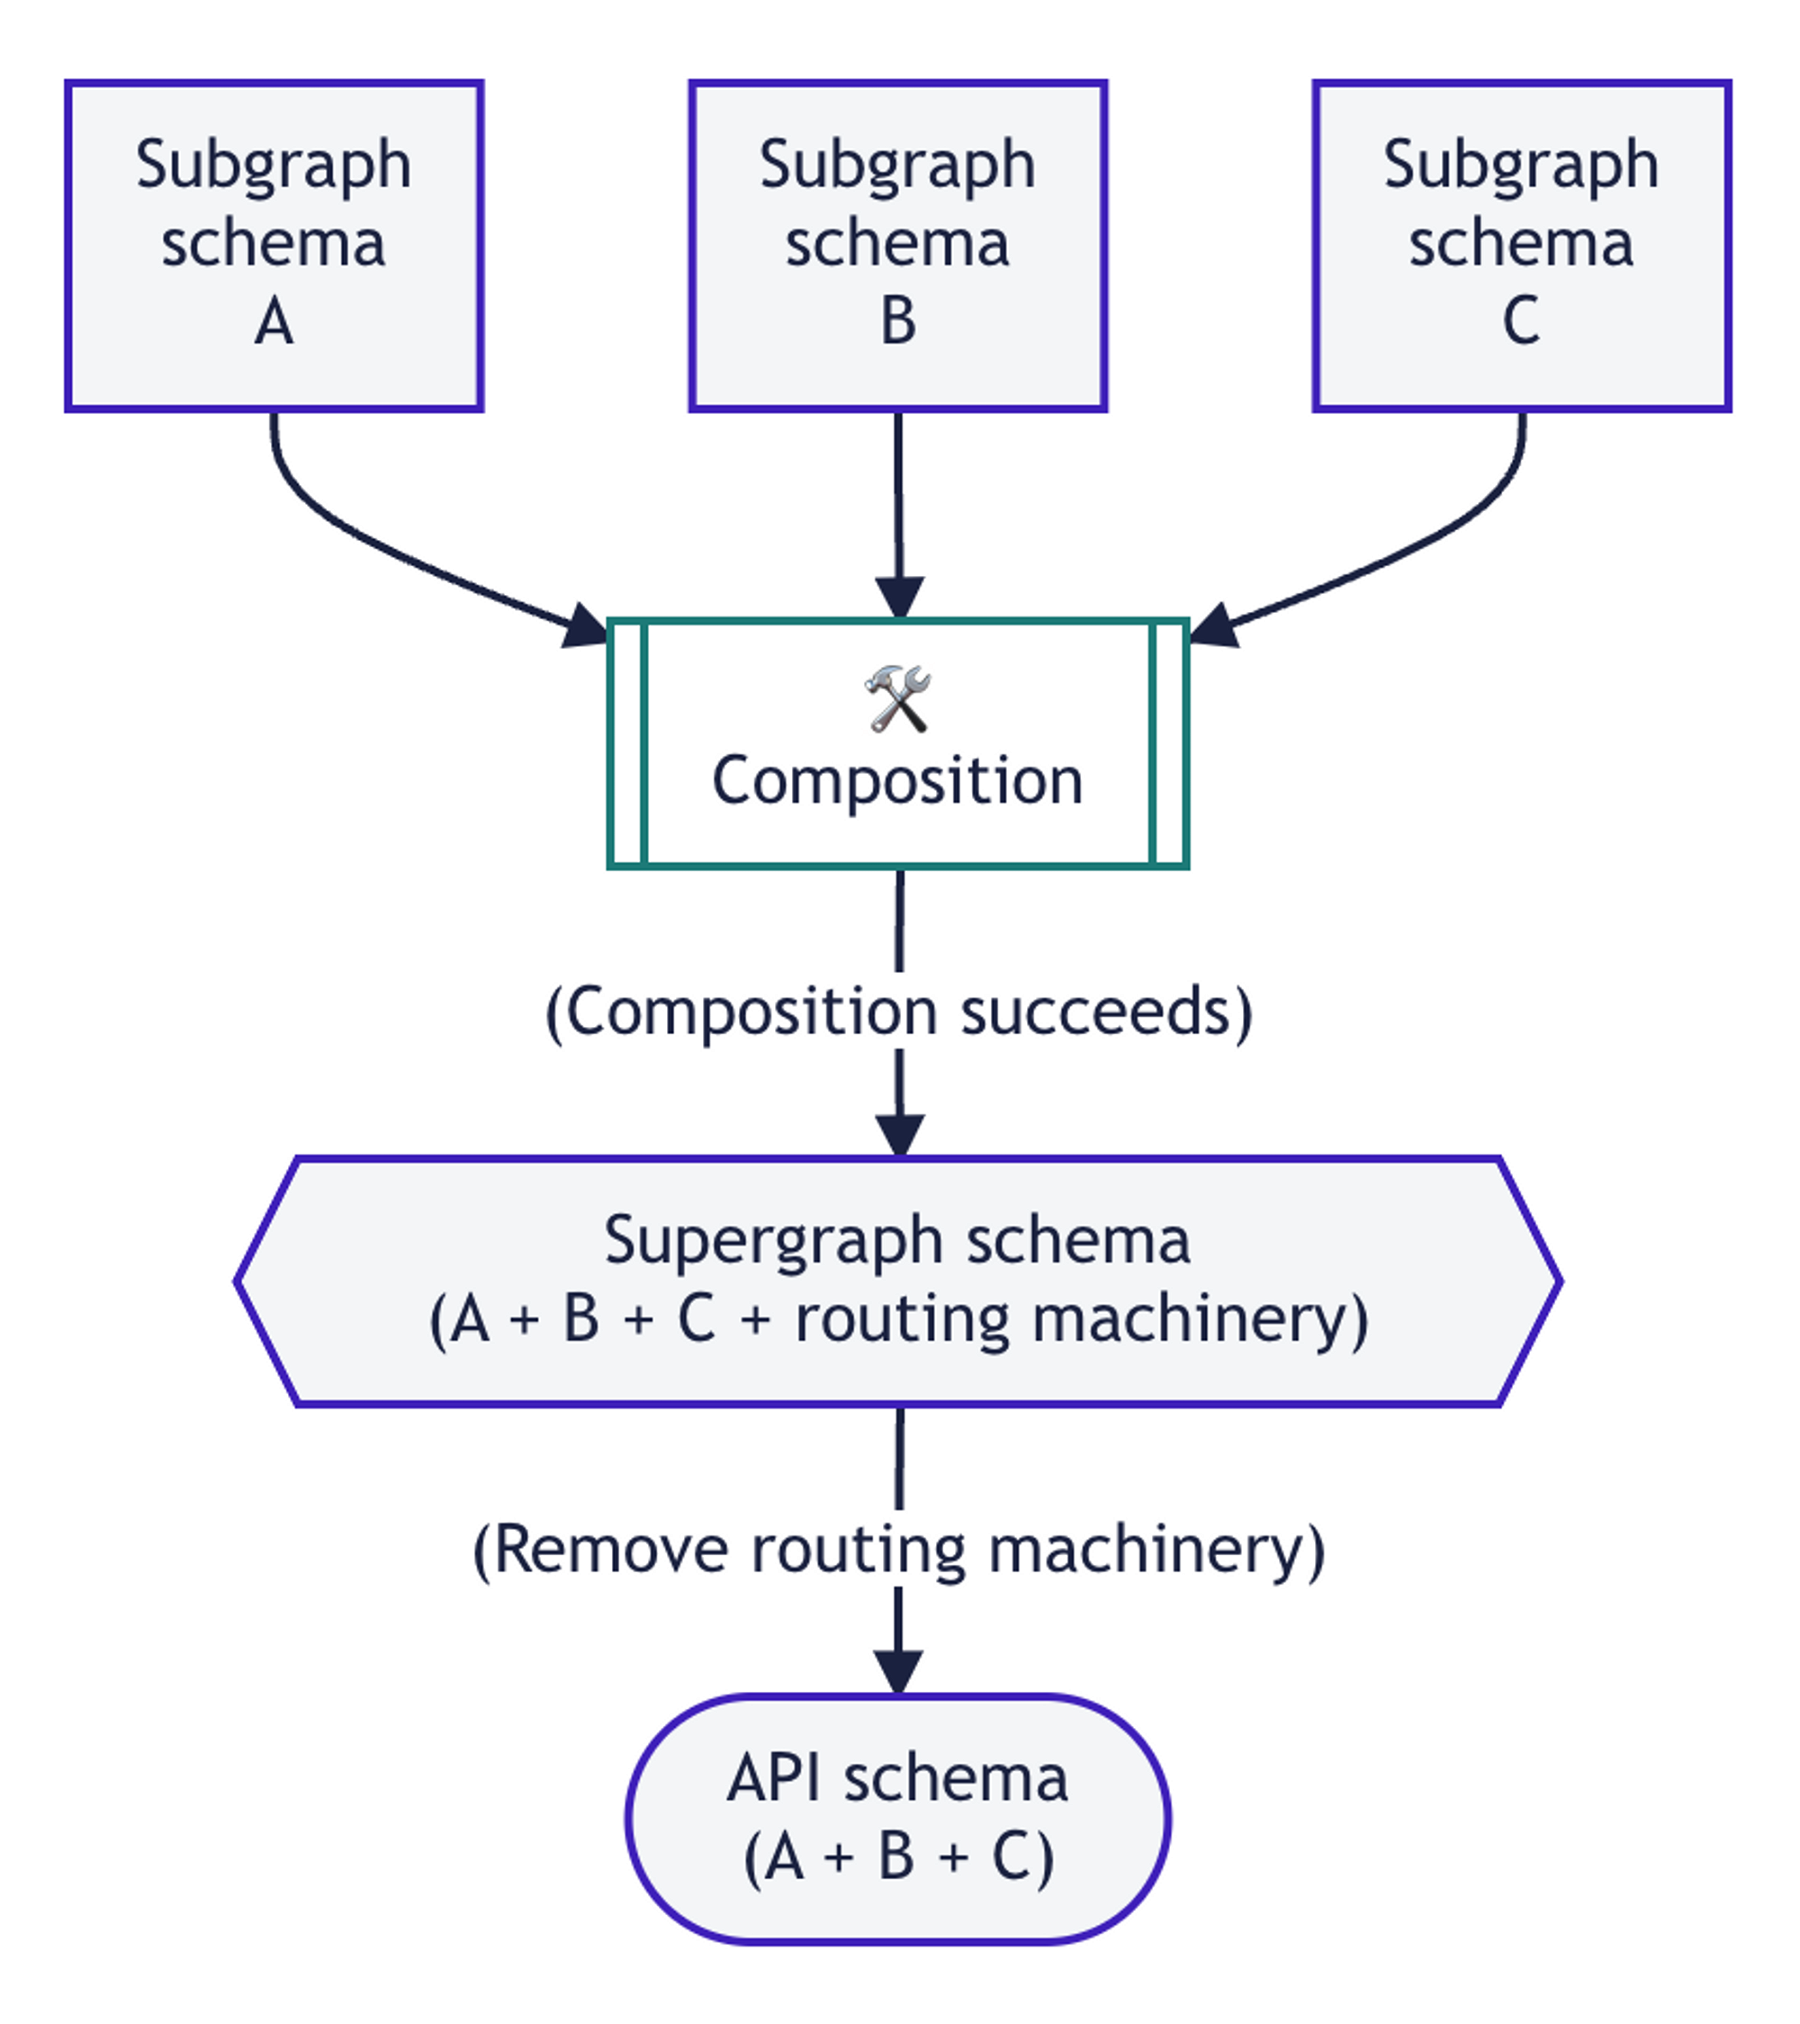 Subgraph, Supergraph, API schema 간의 관계.
출처: https://www.apollographql.com/docs/federation/federated-types/overview